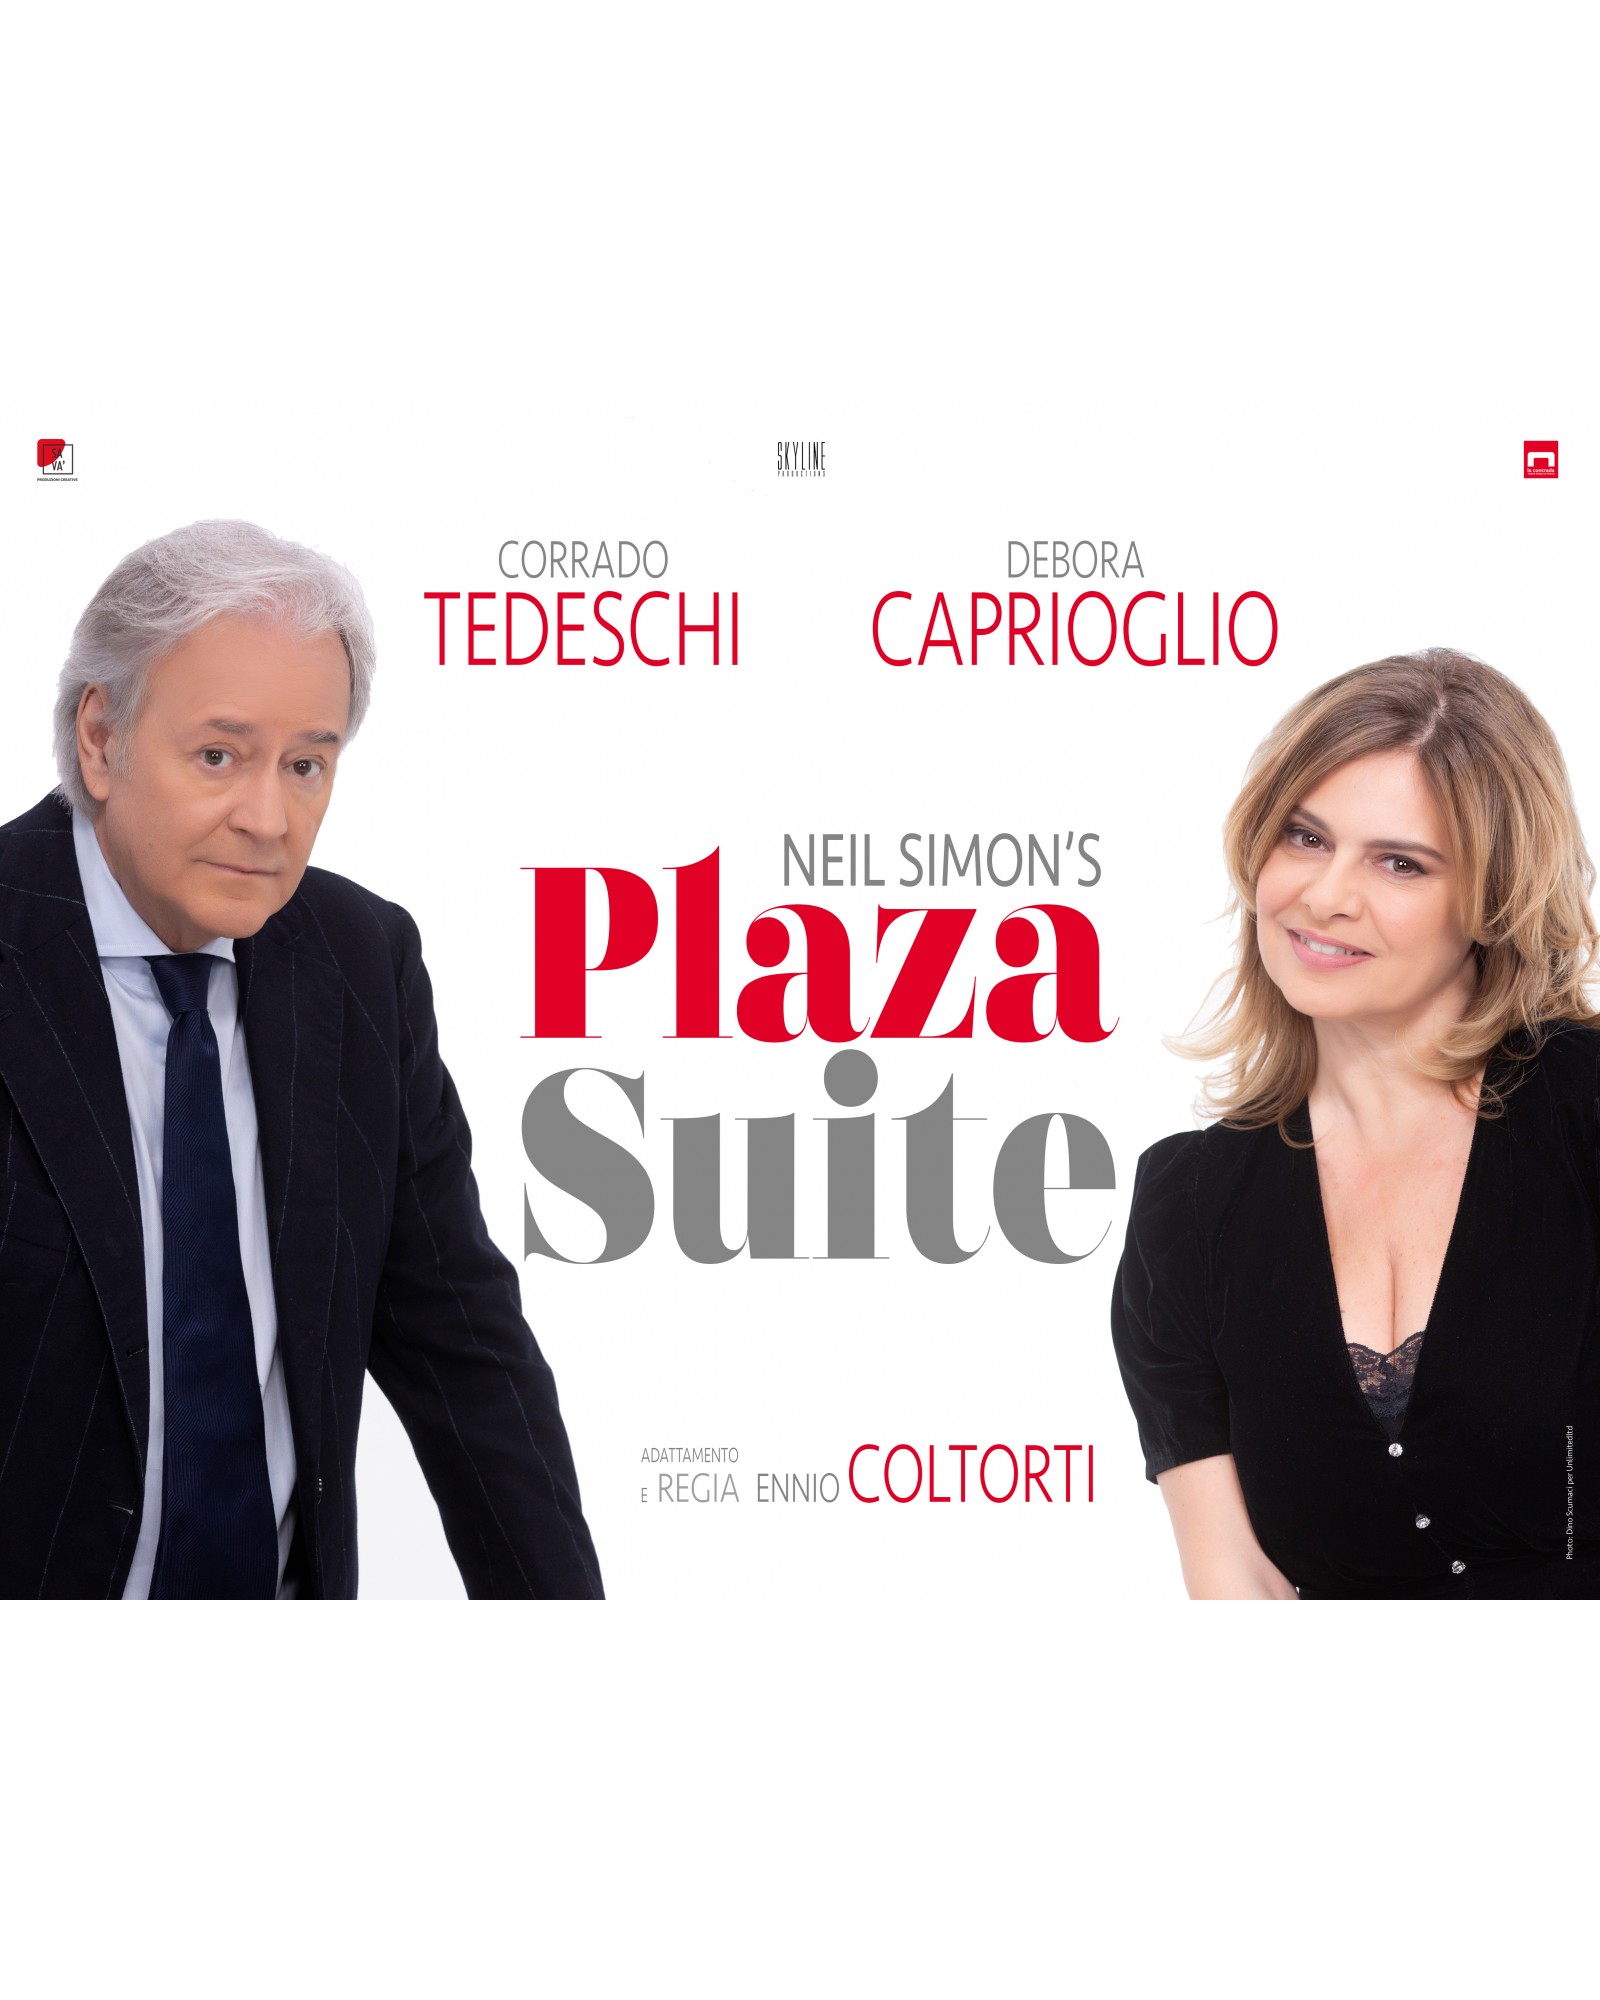 PLAZA SUITE -  Corrado Tedeschi e Debora Caprioglio